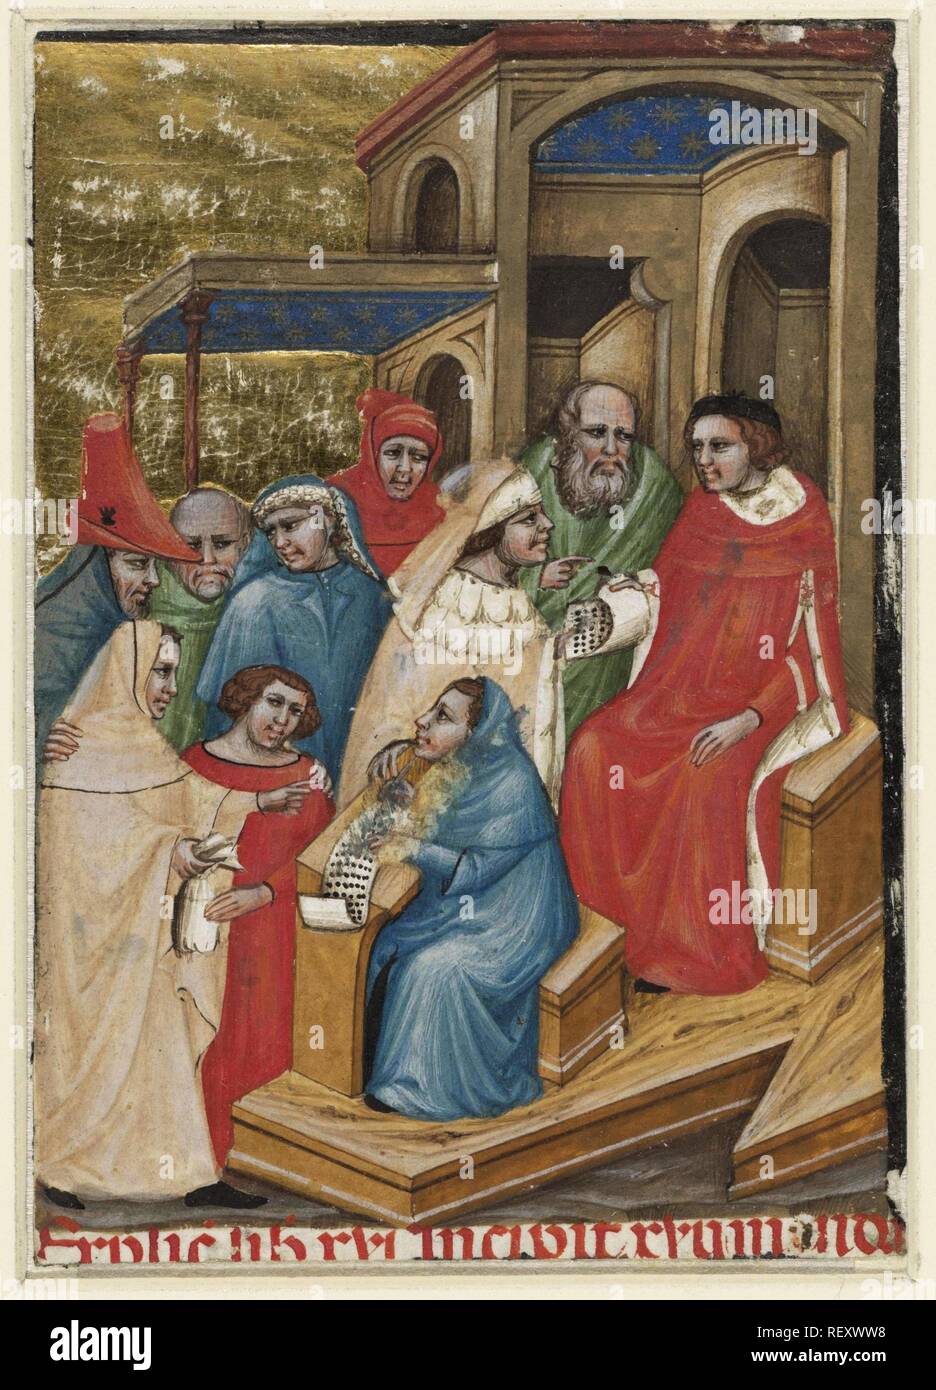 Scene around a court judgment. Draughtsman: Illustratore. Dating: 1340 - 1342. Measurements: h 99 mm × w 70 mm. Museum: Rijksmuseum, Amsterdam. Stock Photo